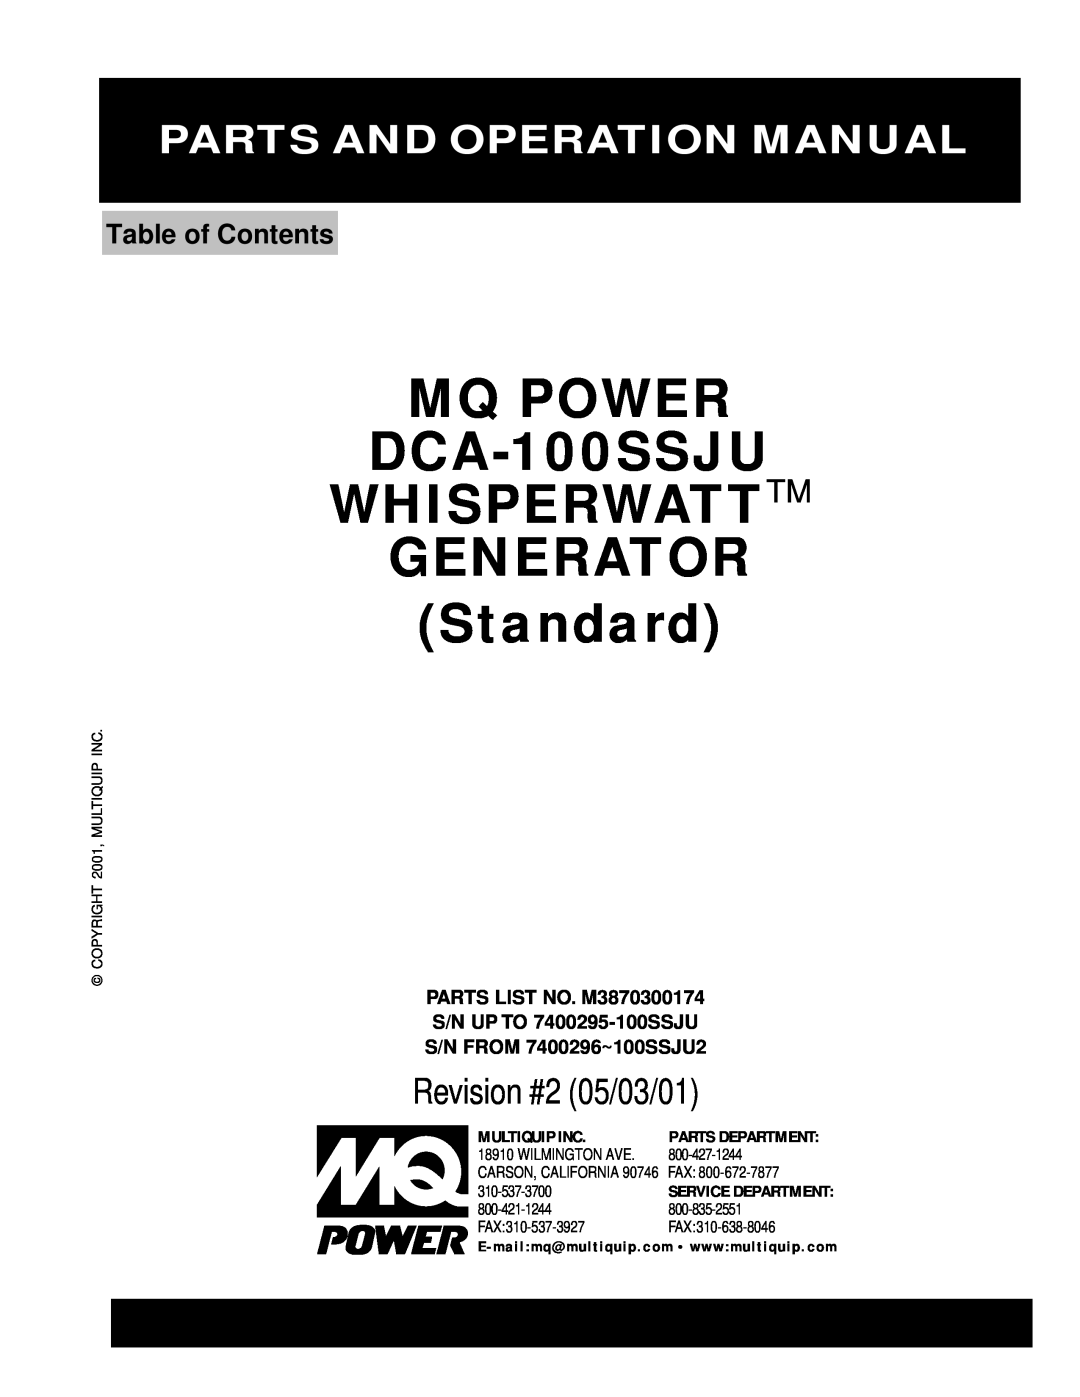 Multiquip operation manual MQ POWER DCA-100SSJU WHISPERWATTTM GENERATOR, Standard, Revision #2 05/03/01, Multiquip Inc 